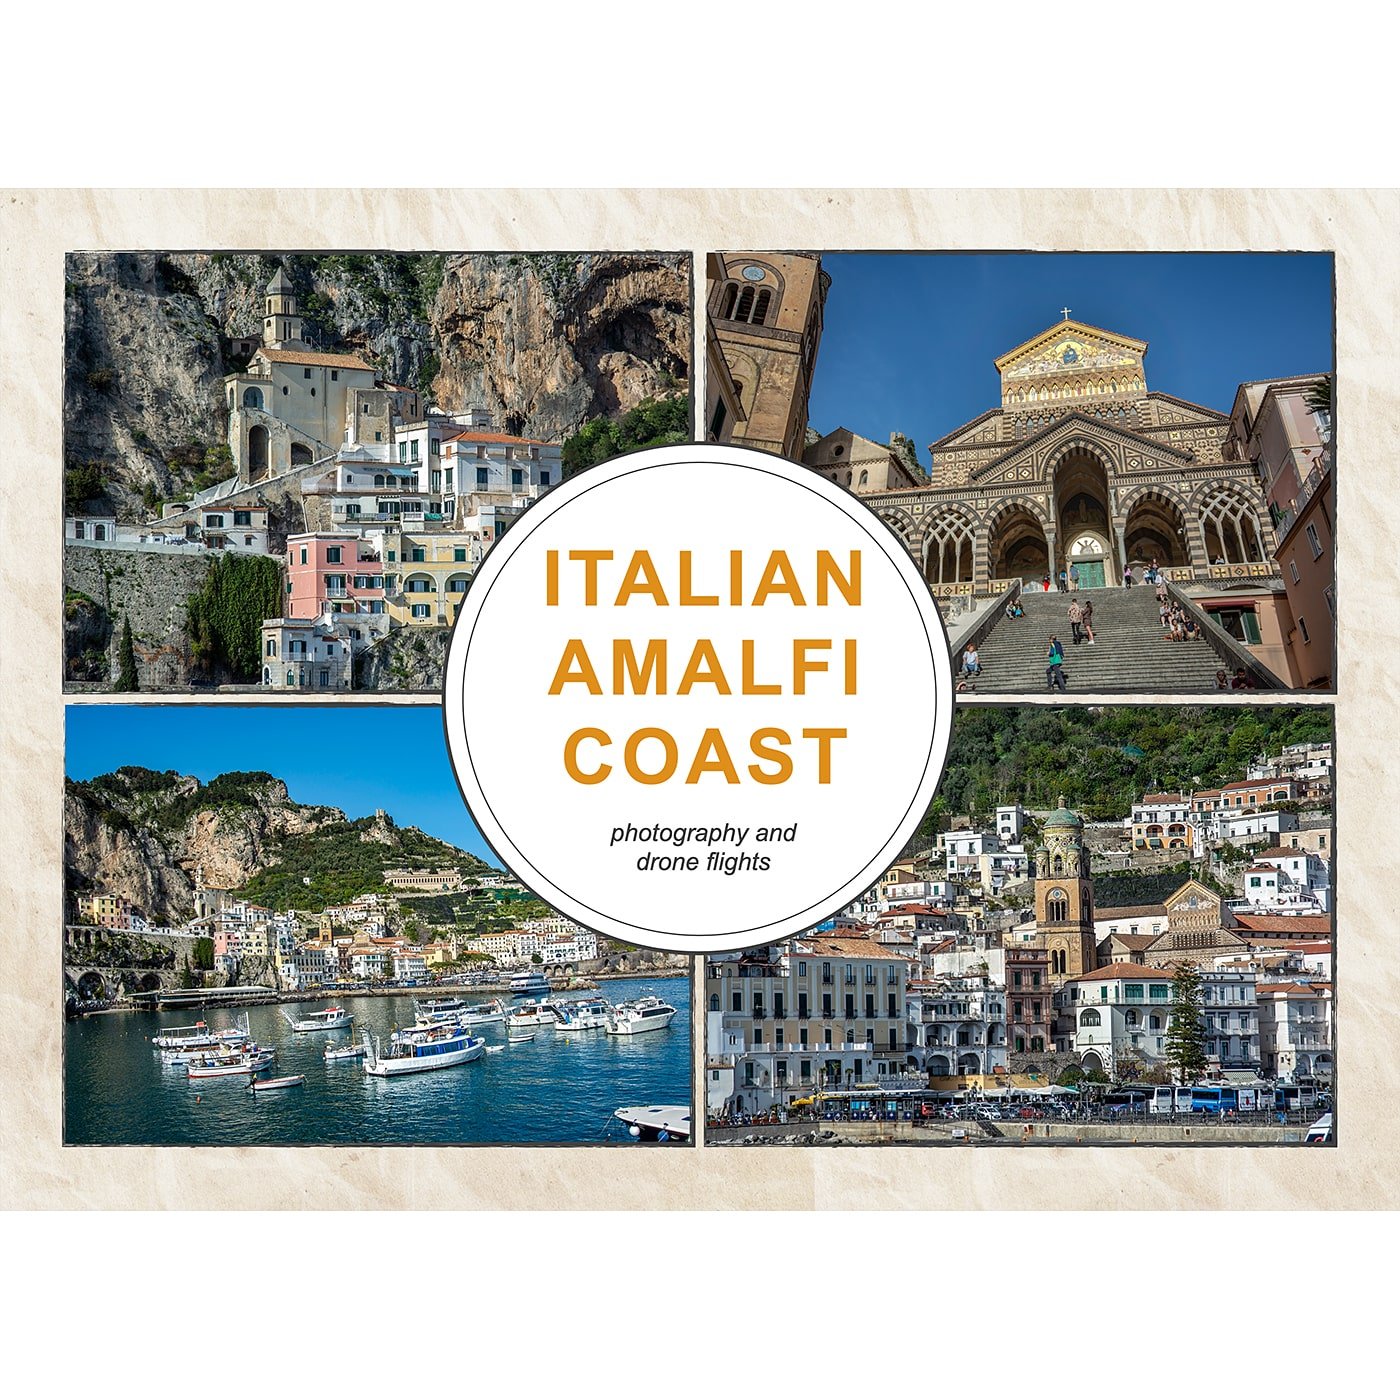 Capturing the Enchanting Amalfi Coast: A Journey with John Vijlbrief